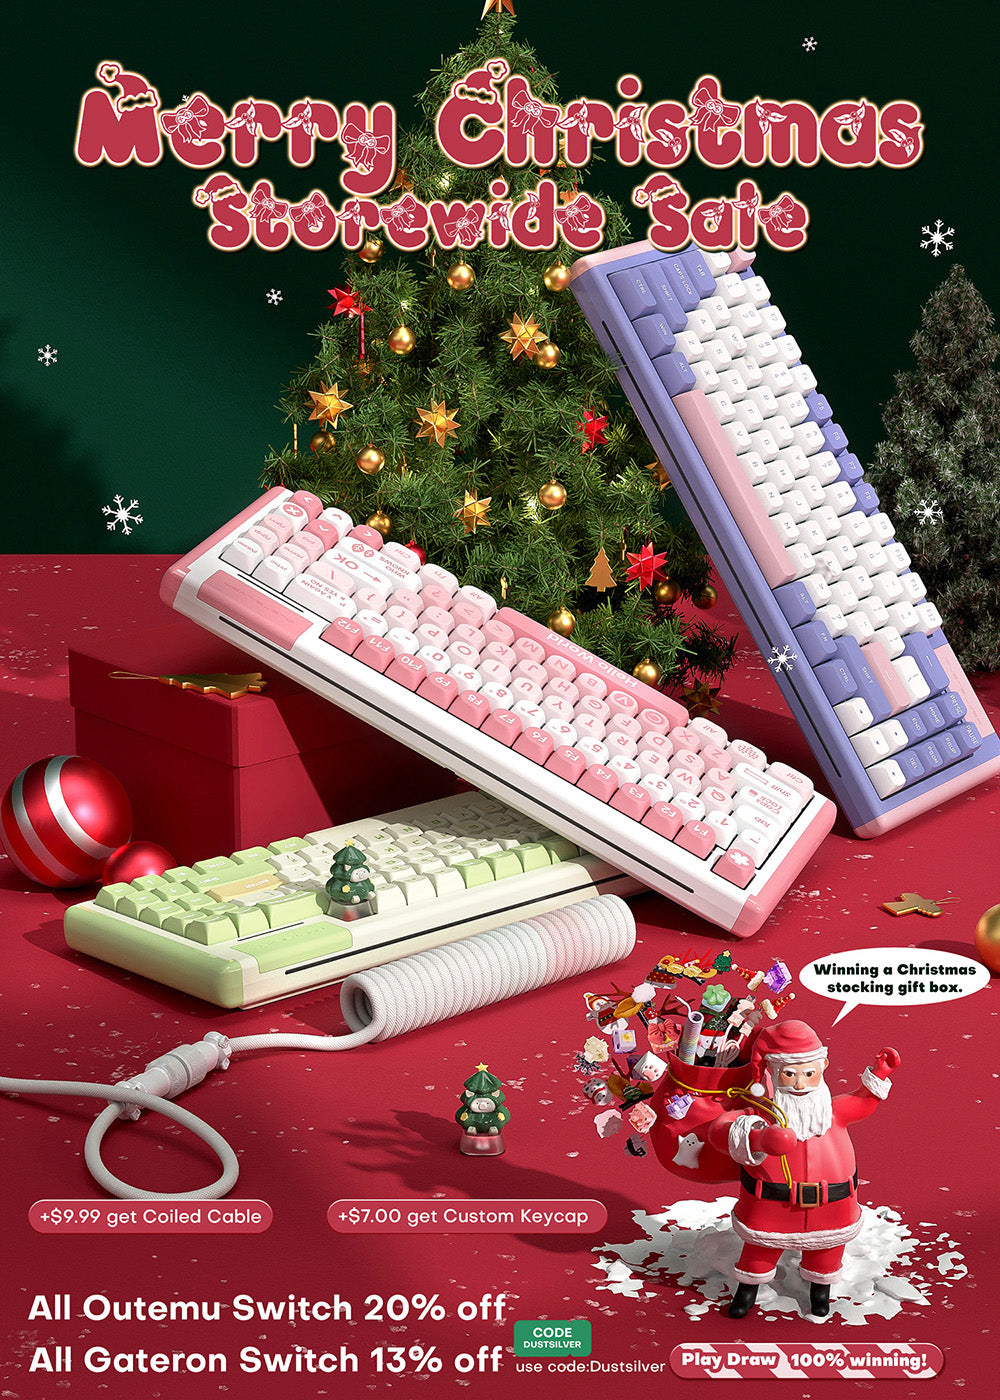 Merry Christmas Dustsilver Keyboard